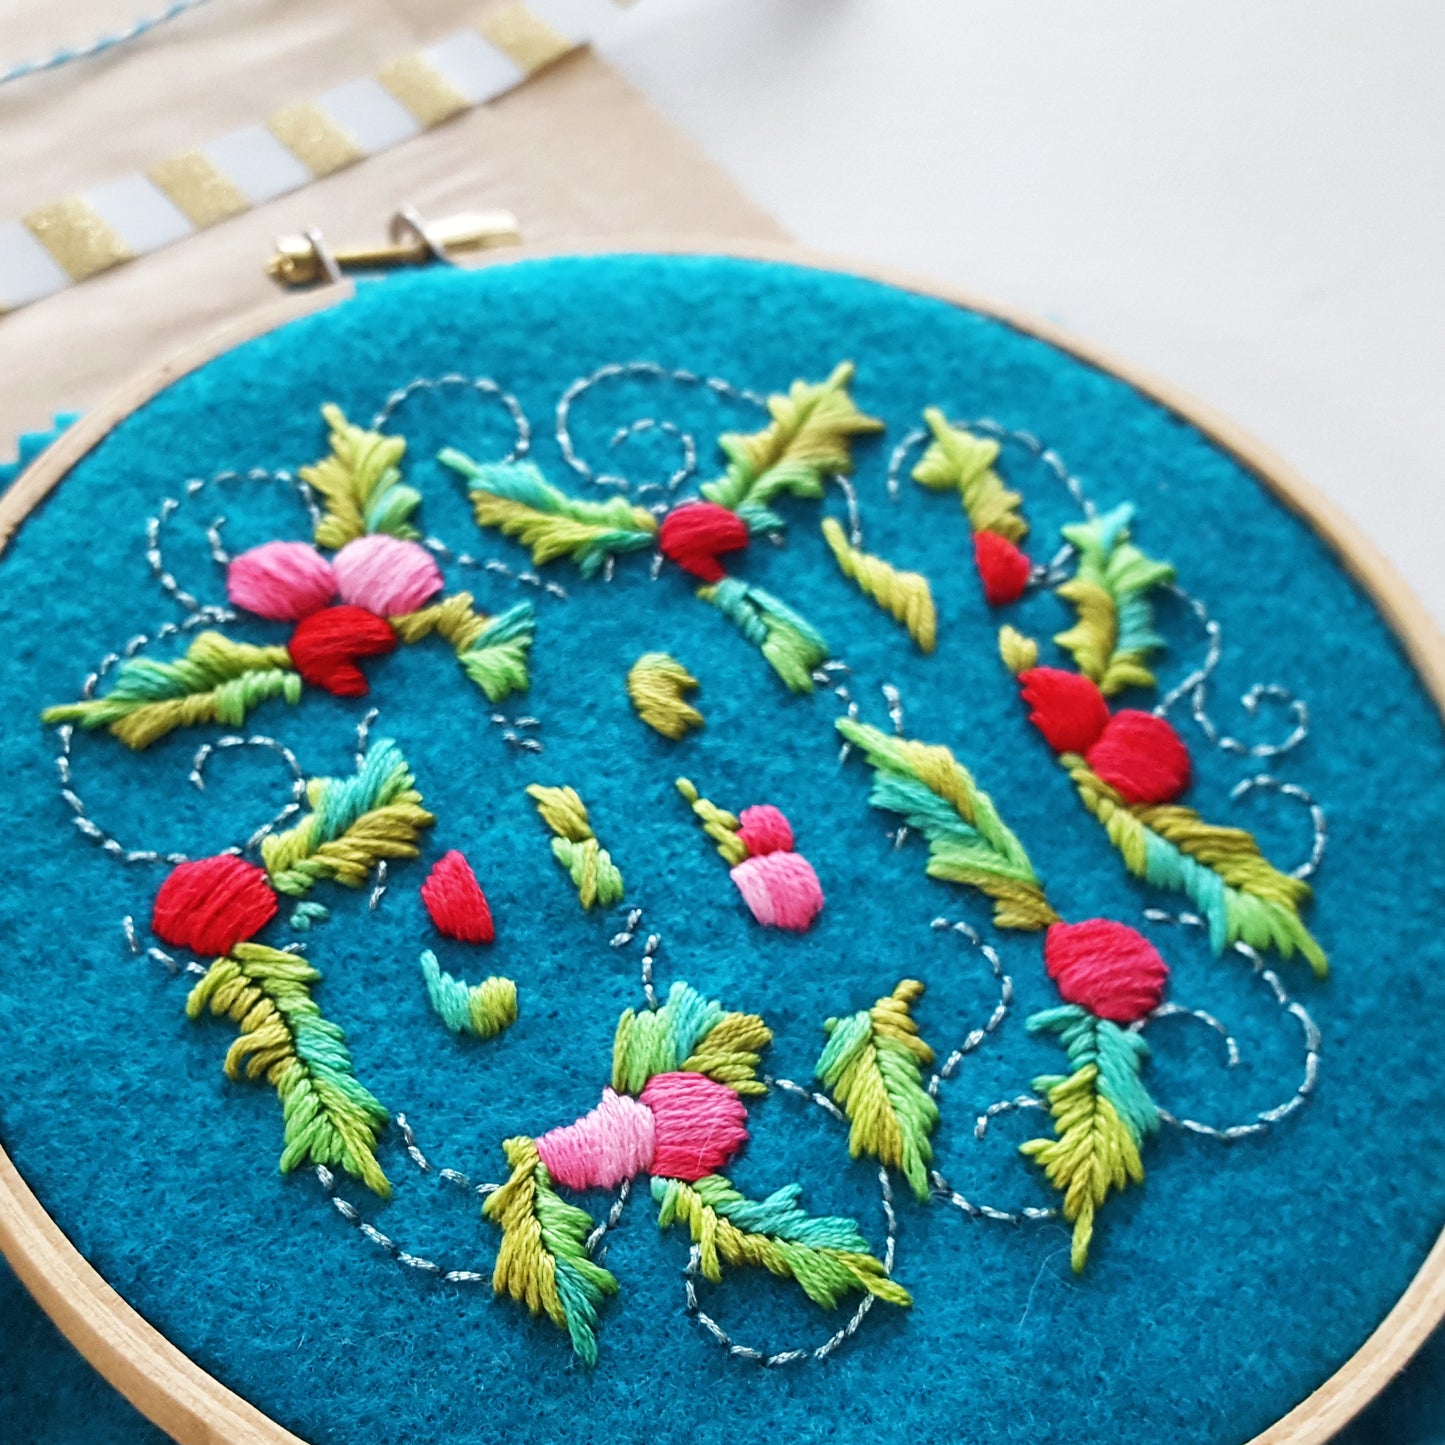 Joy's hand embroidery